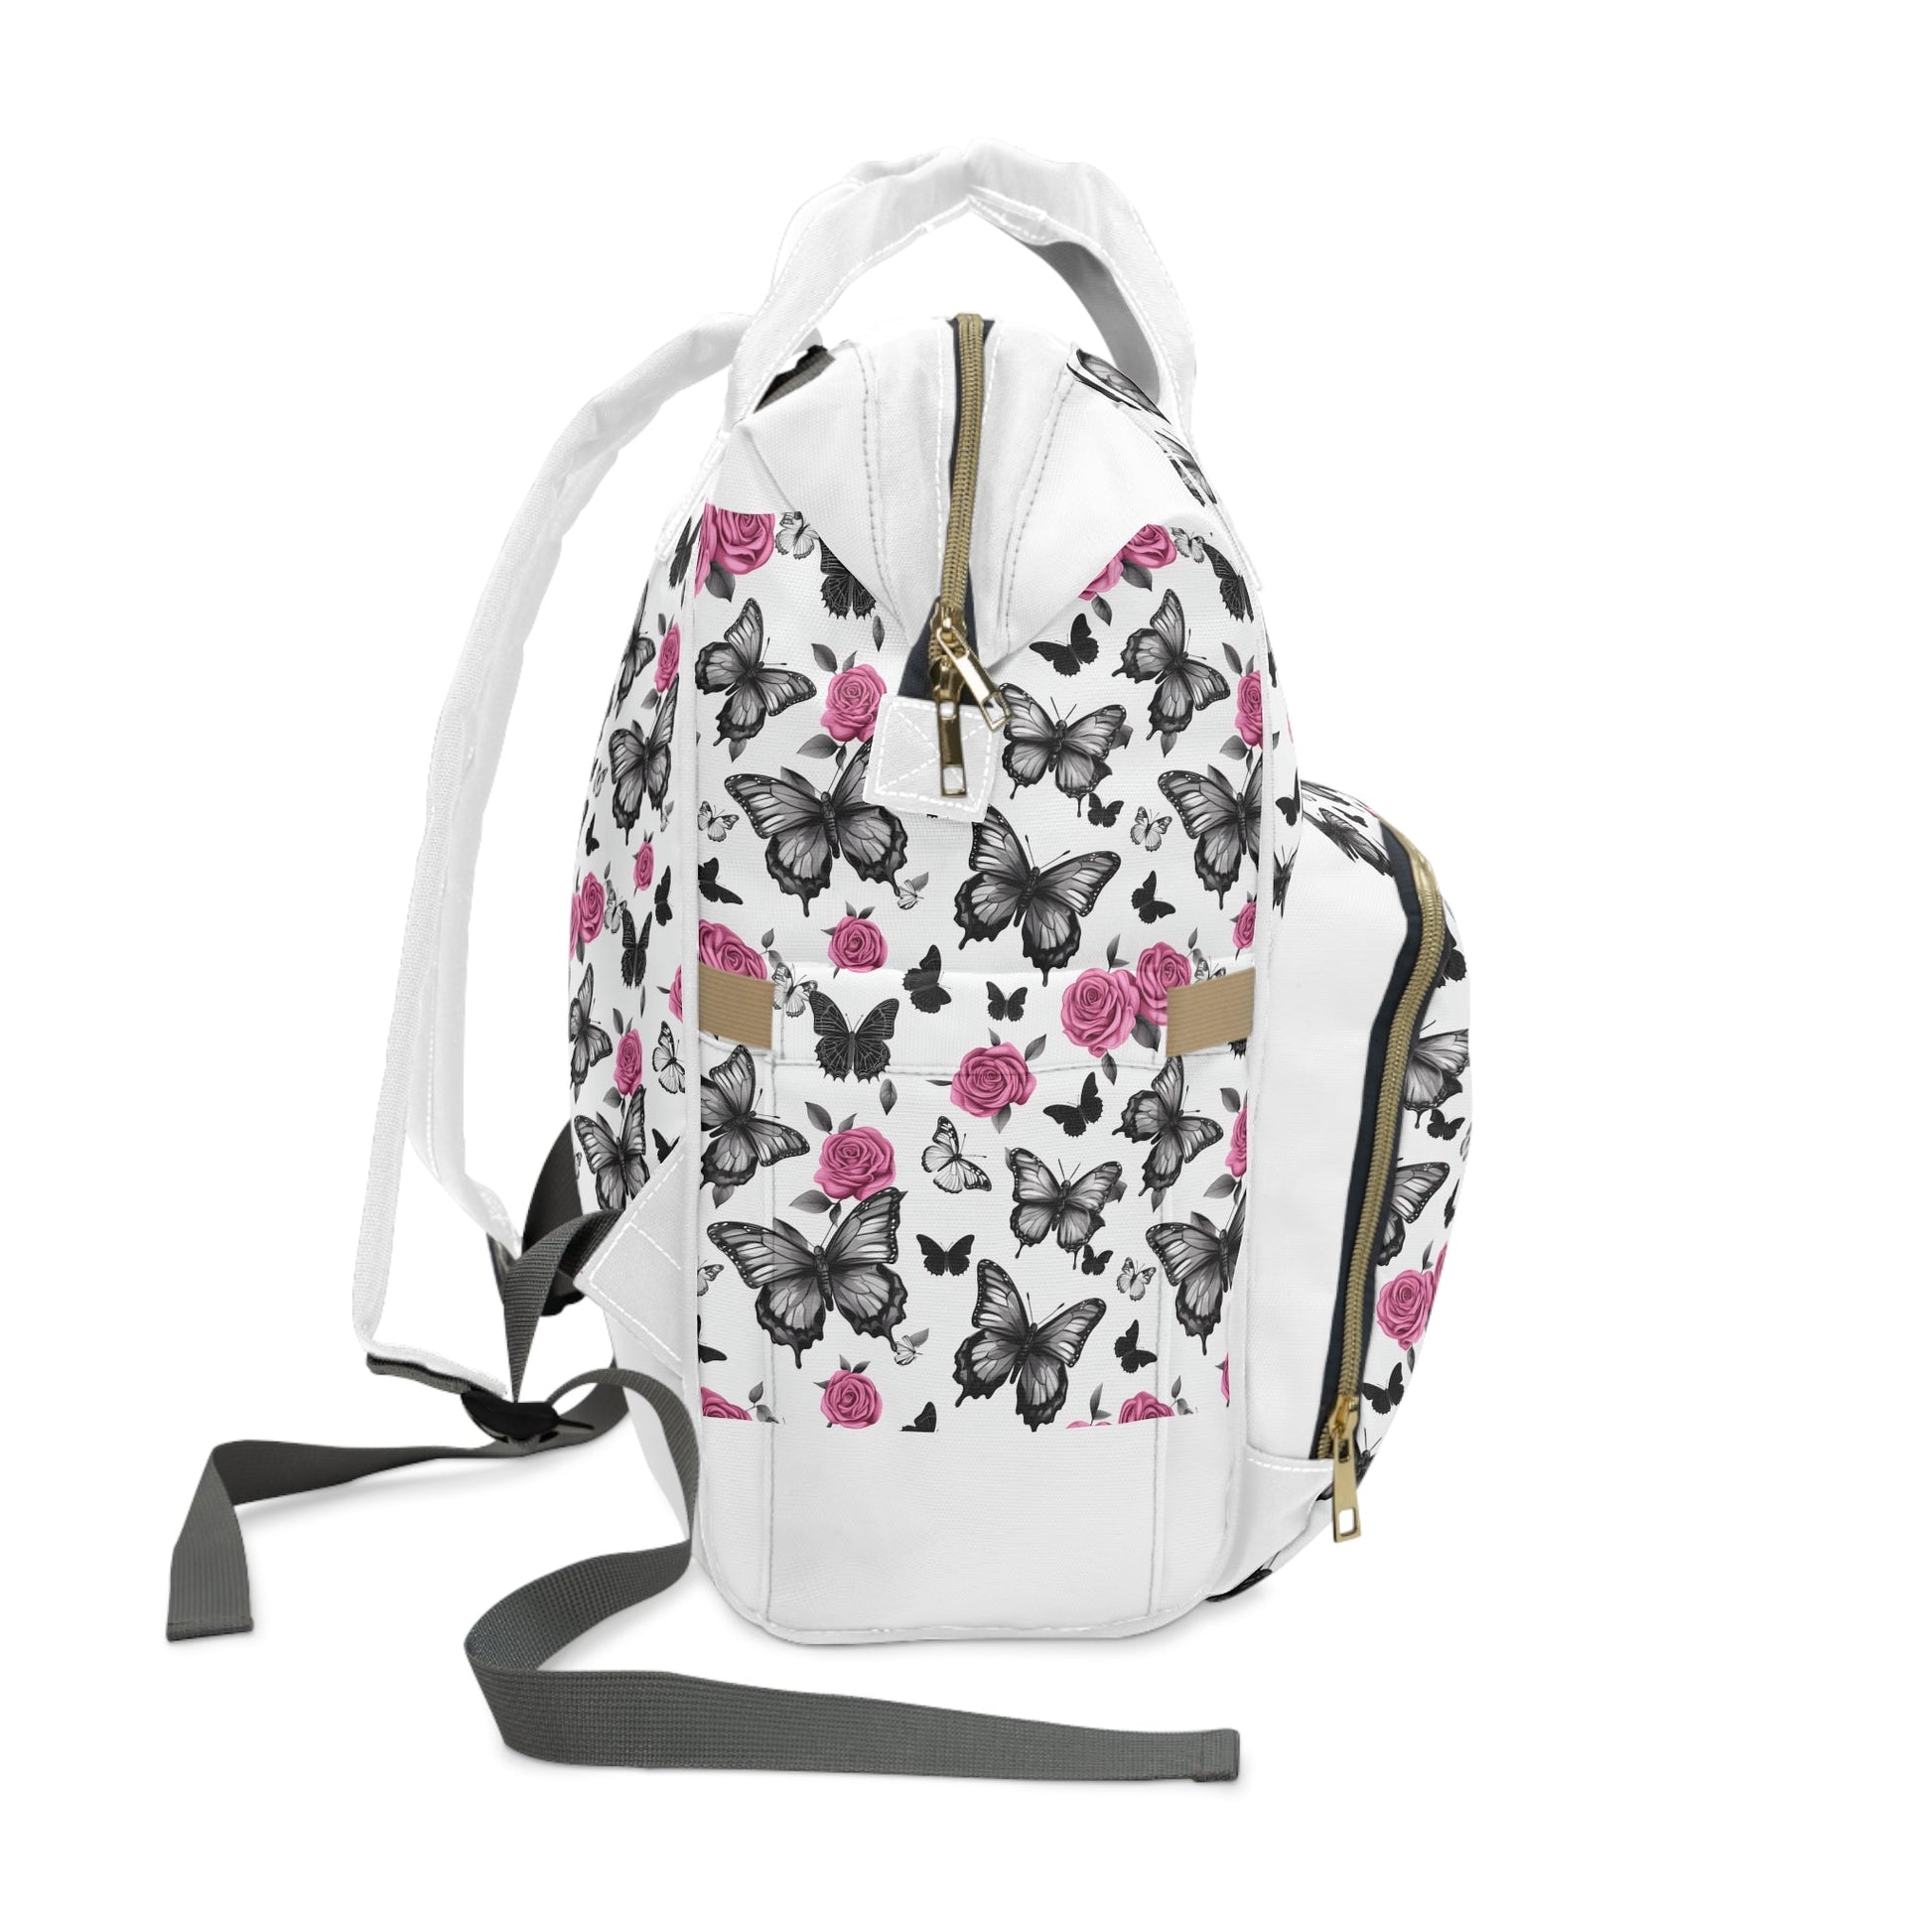 Pink Roses Black Butterflies Girls Multifunctional Diaper Bag BackpackBagsVTZdesigns15.0" × 10.8" × 6.7''AccessoriesAll Over PrintAOP